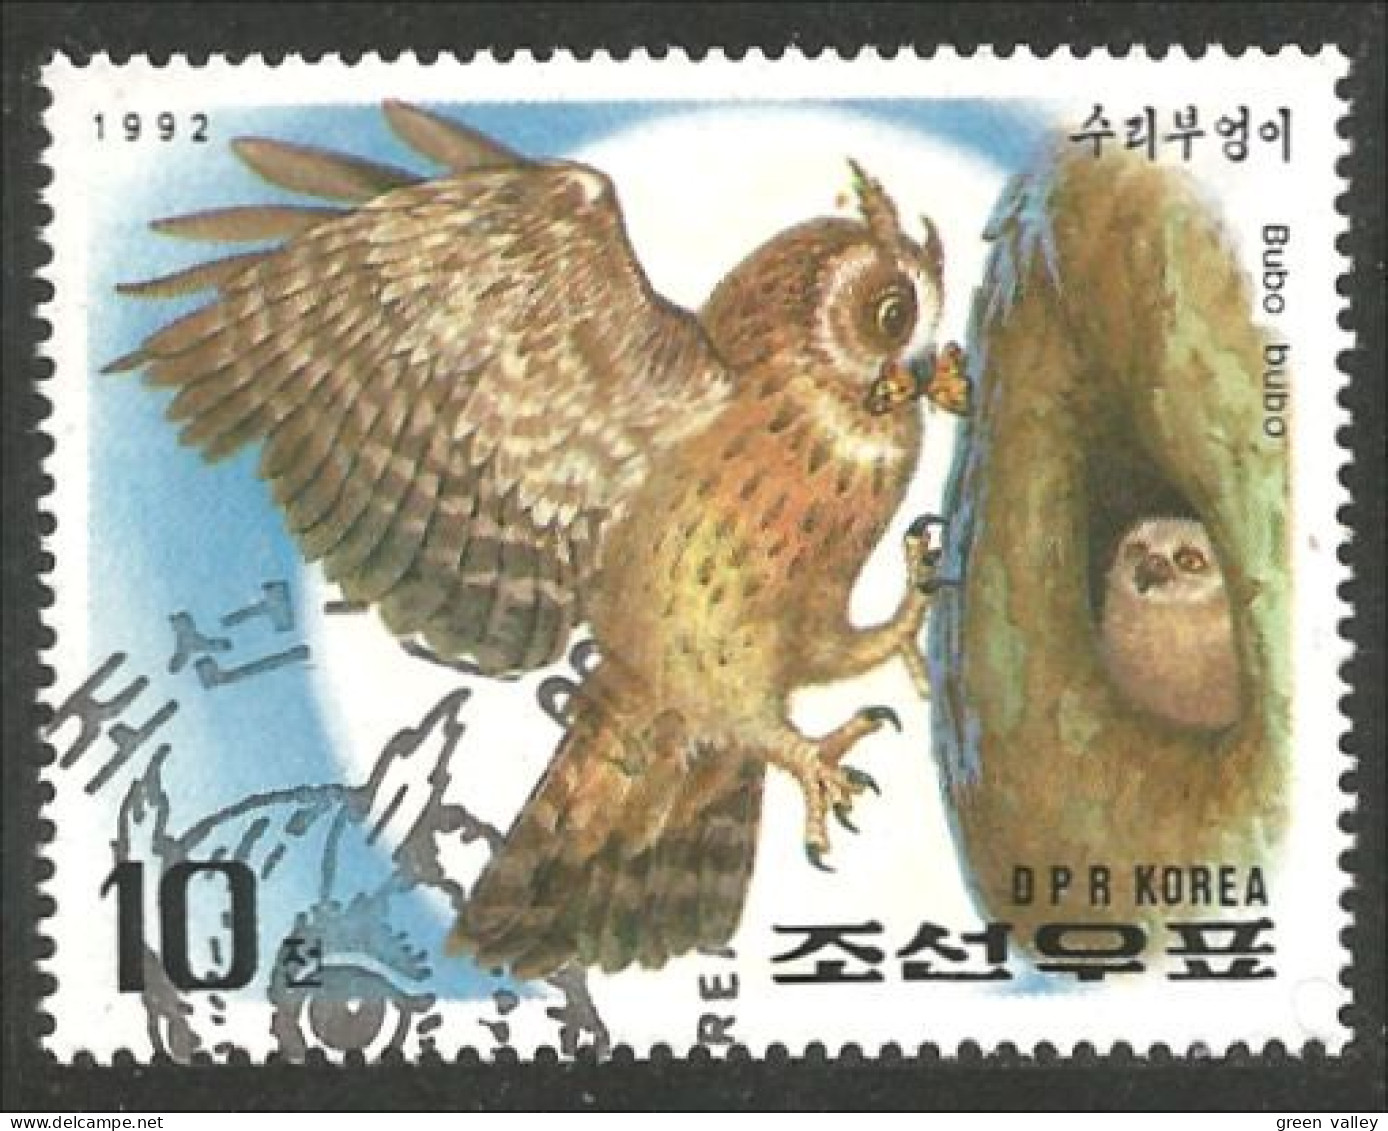 548 Korea Hibou Chouette Owl Eule Gufo Uil Buho (KON-48b) - Águilas & Aves De Presa